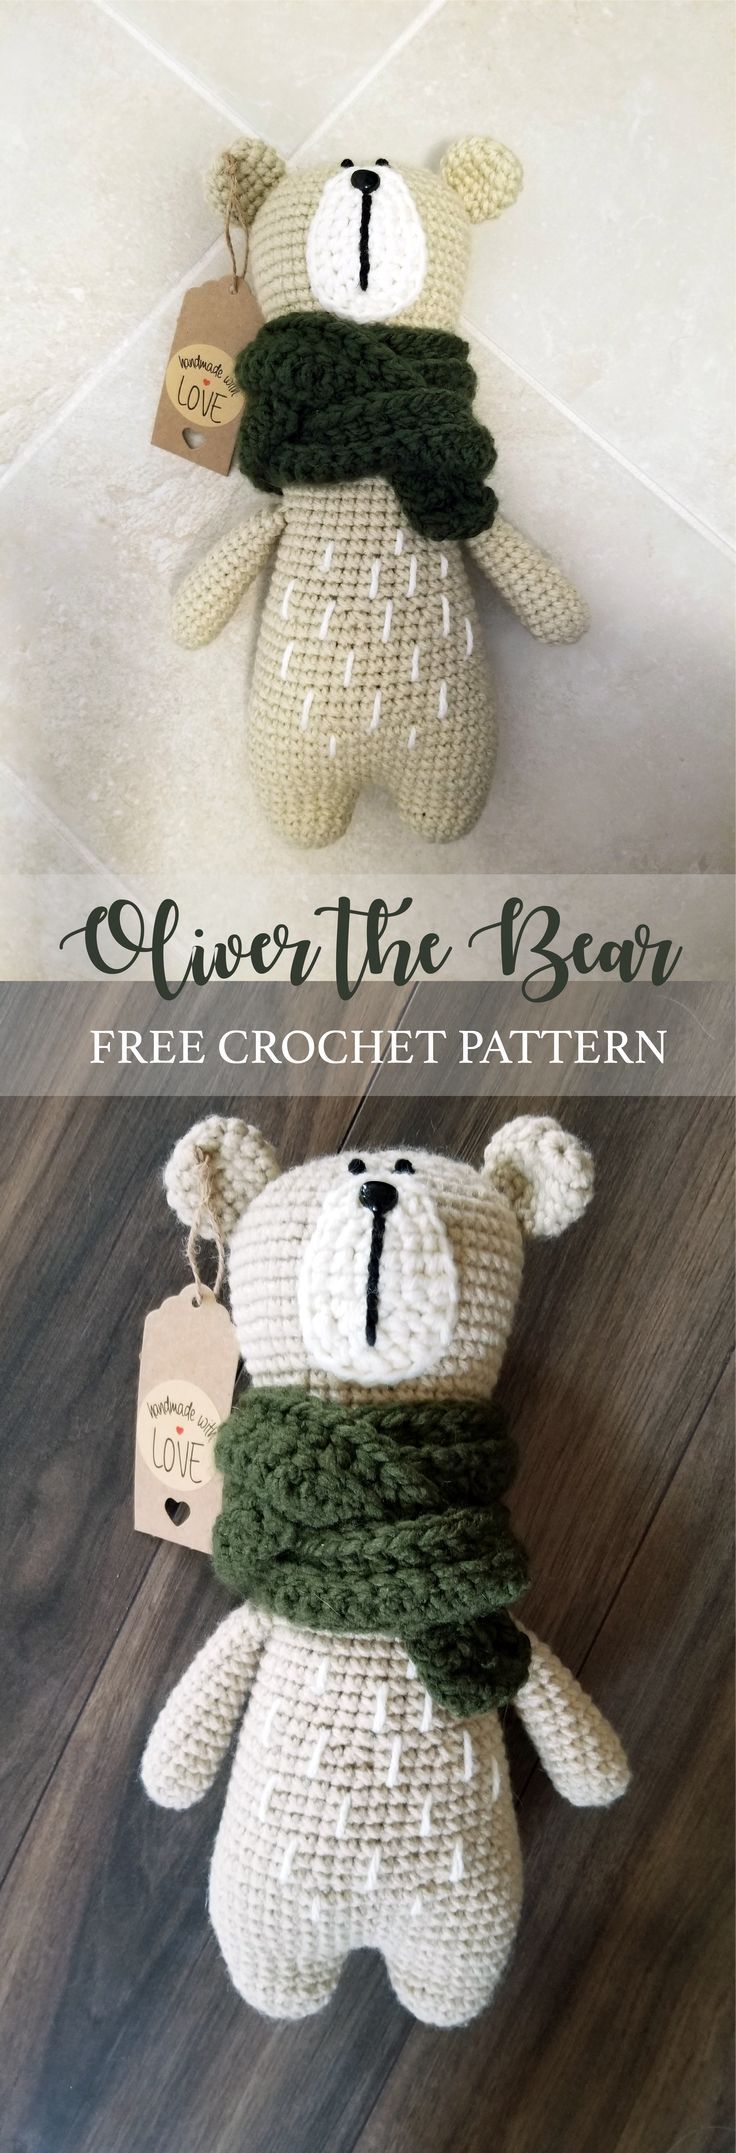 Oliver-the-Bear-Free-Amigurumi-Crochet-Pattern.jpg